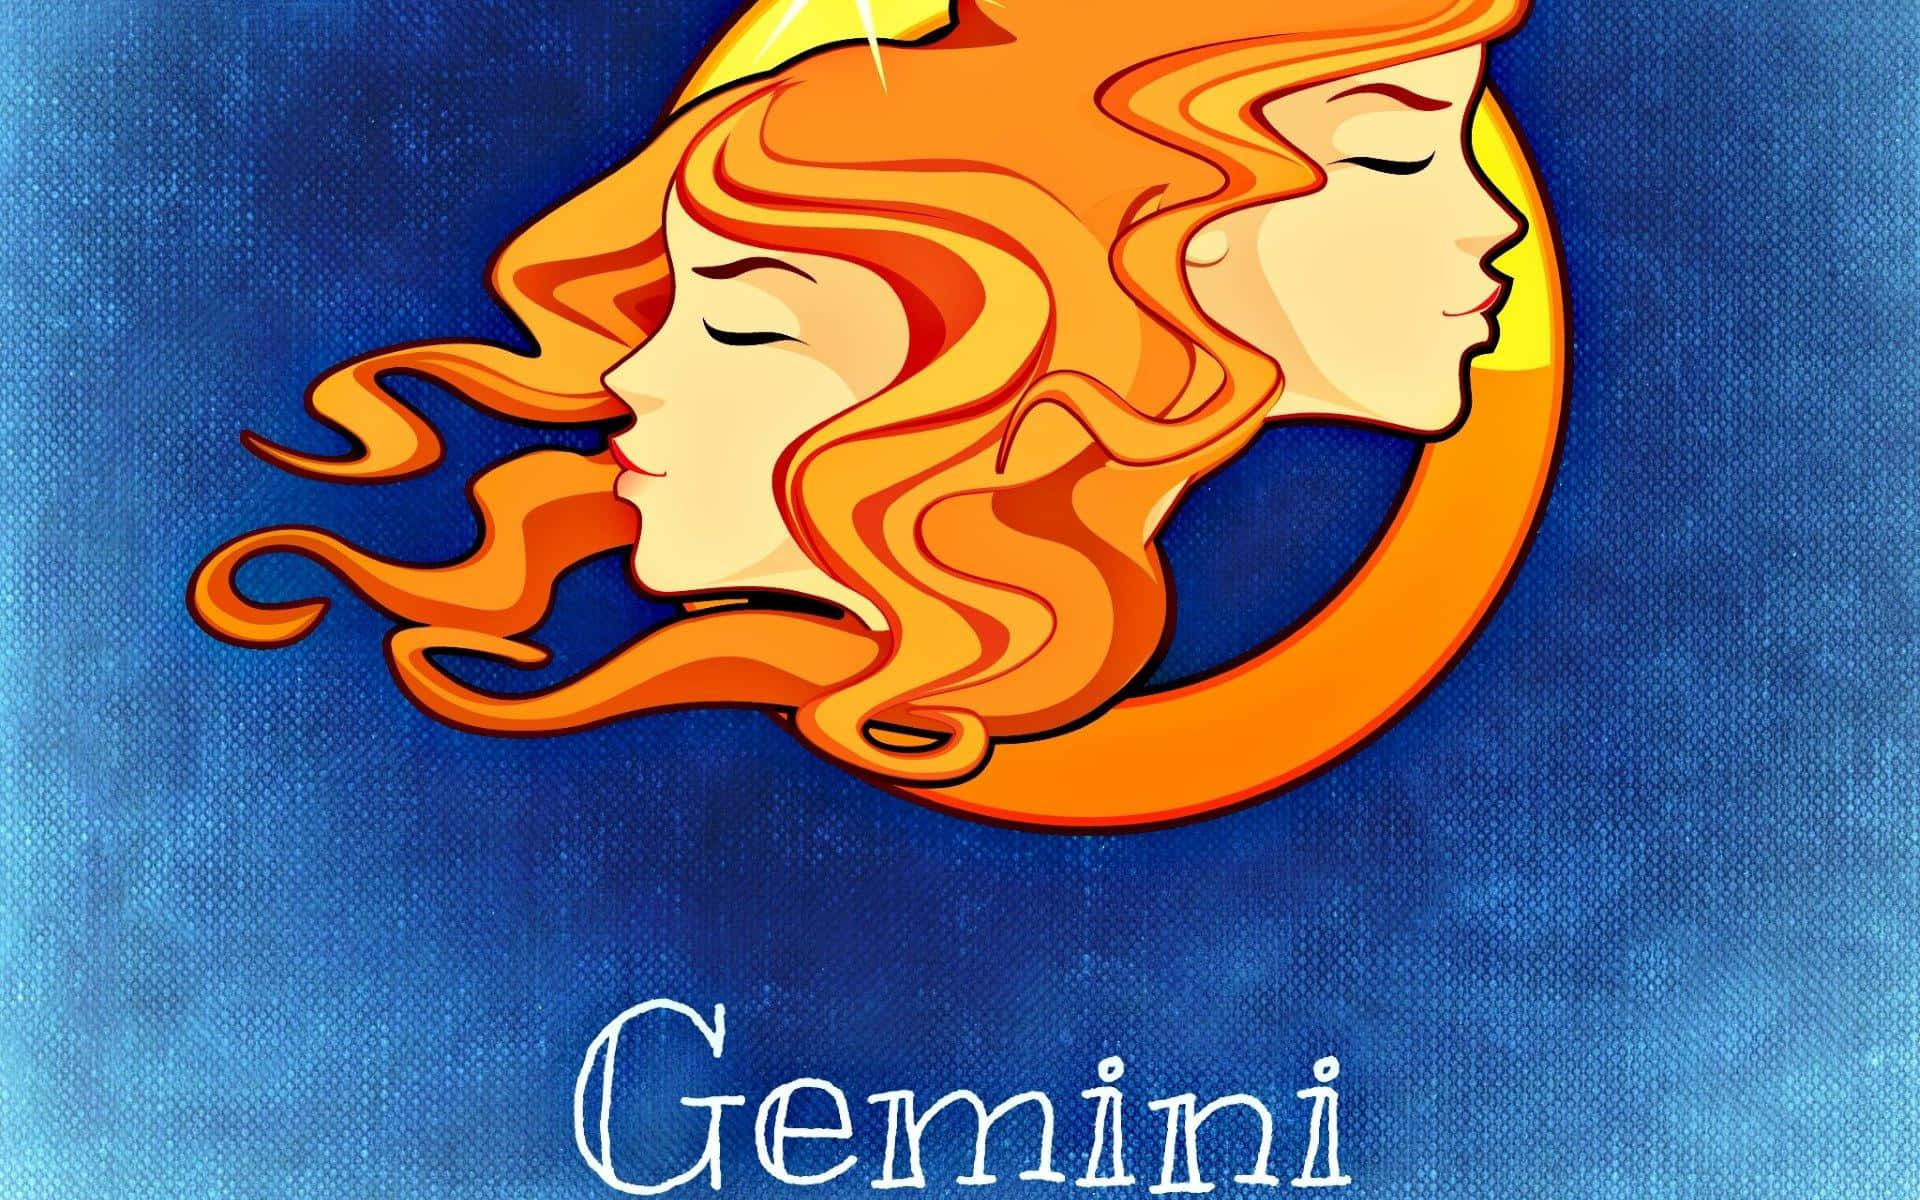 Celestial Gemini Artwork